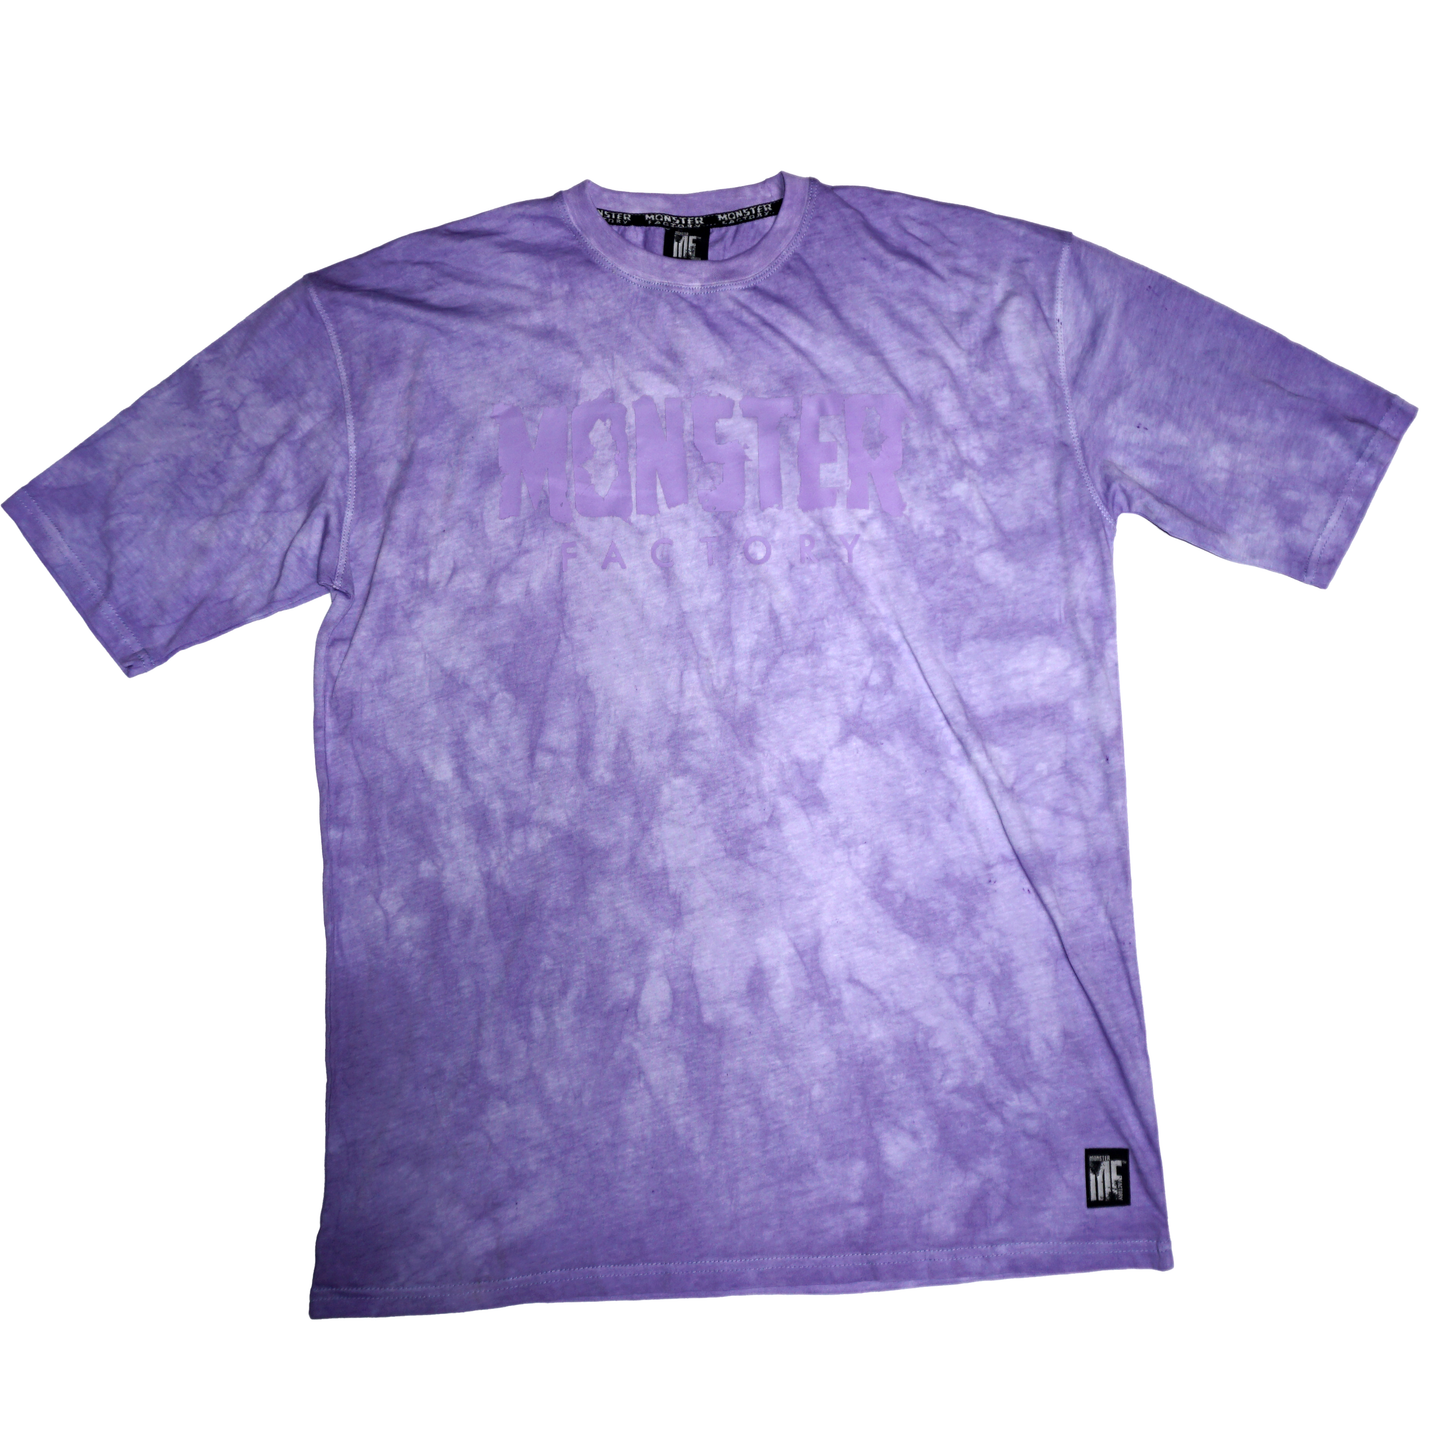 CarnEVIL Oversized Acid wash T-Shirt